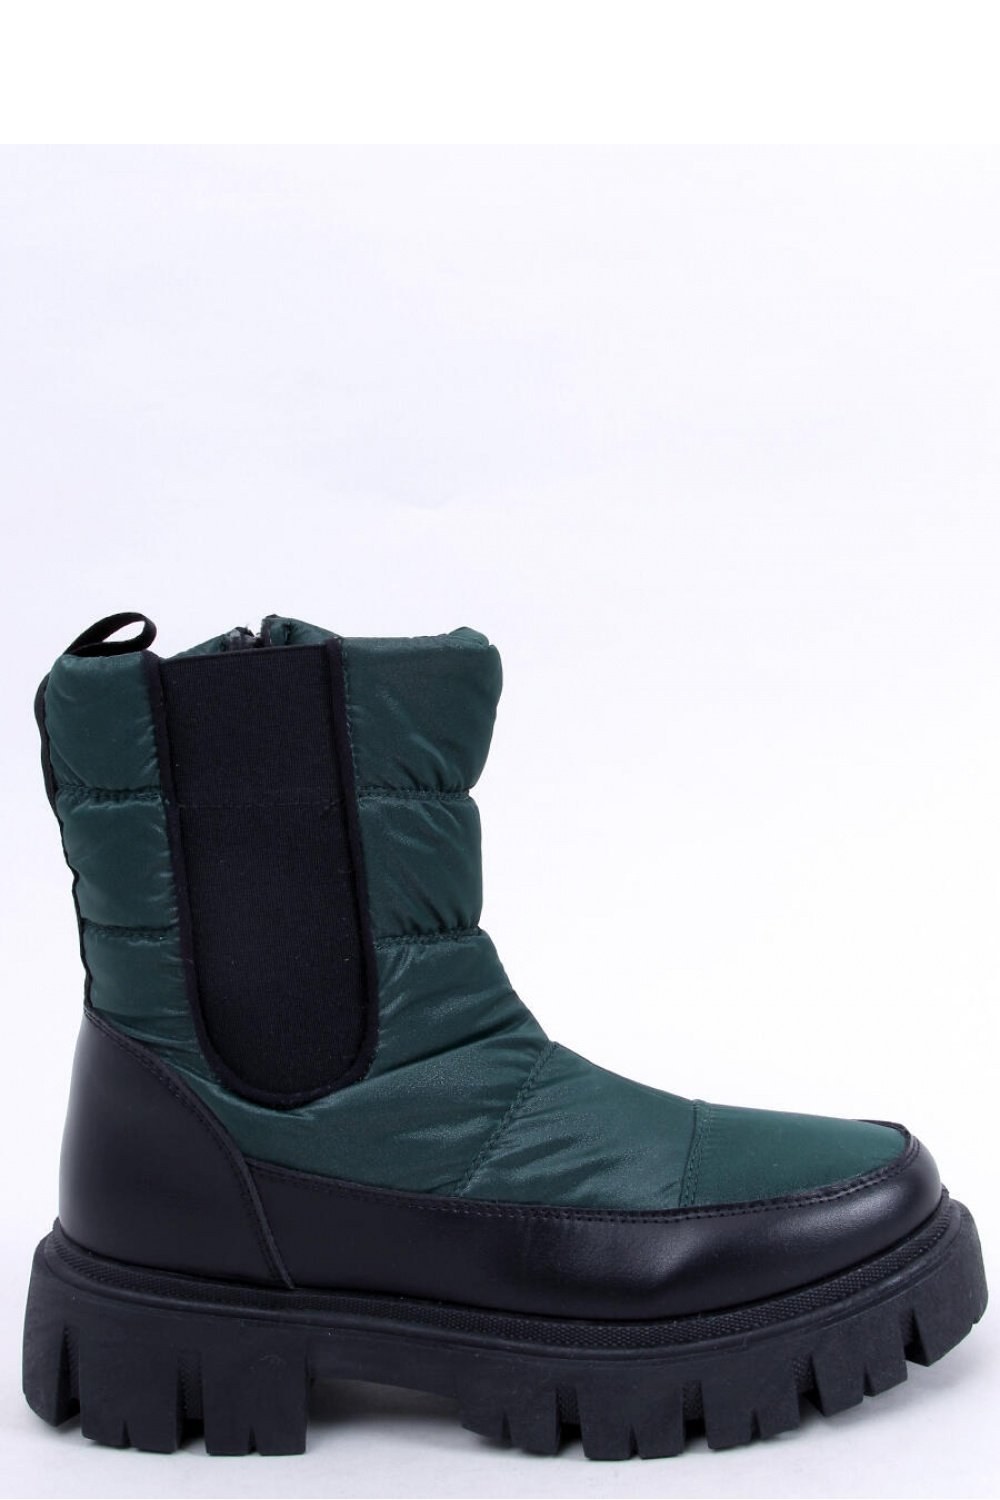 Snow boots model 171605 Inello Posh Styles Apparel